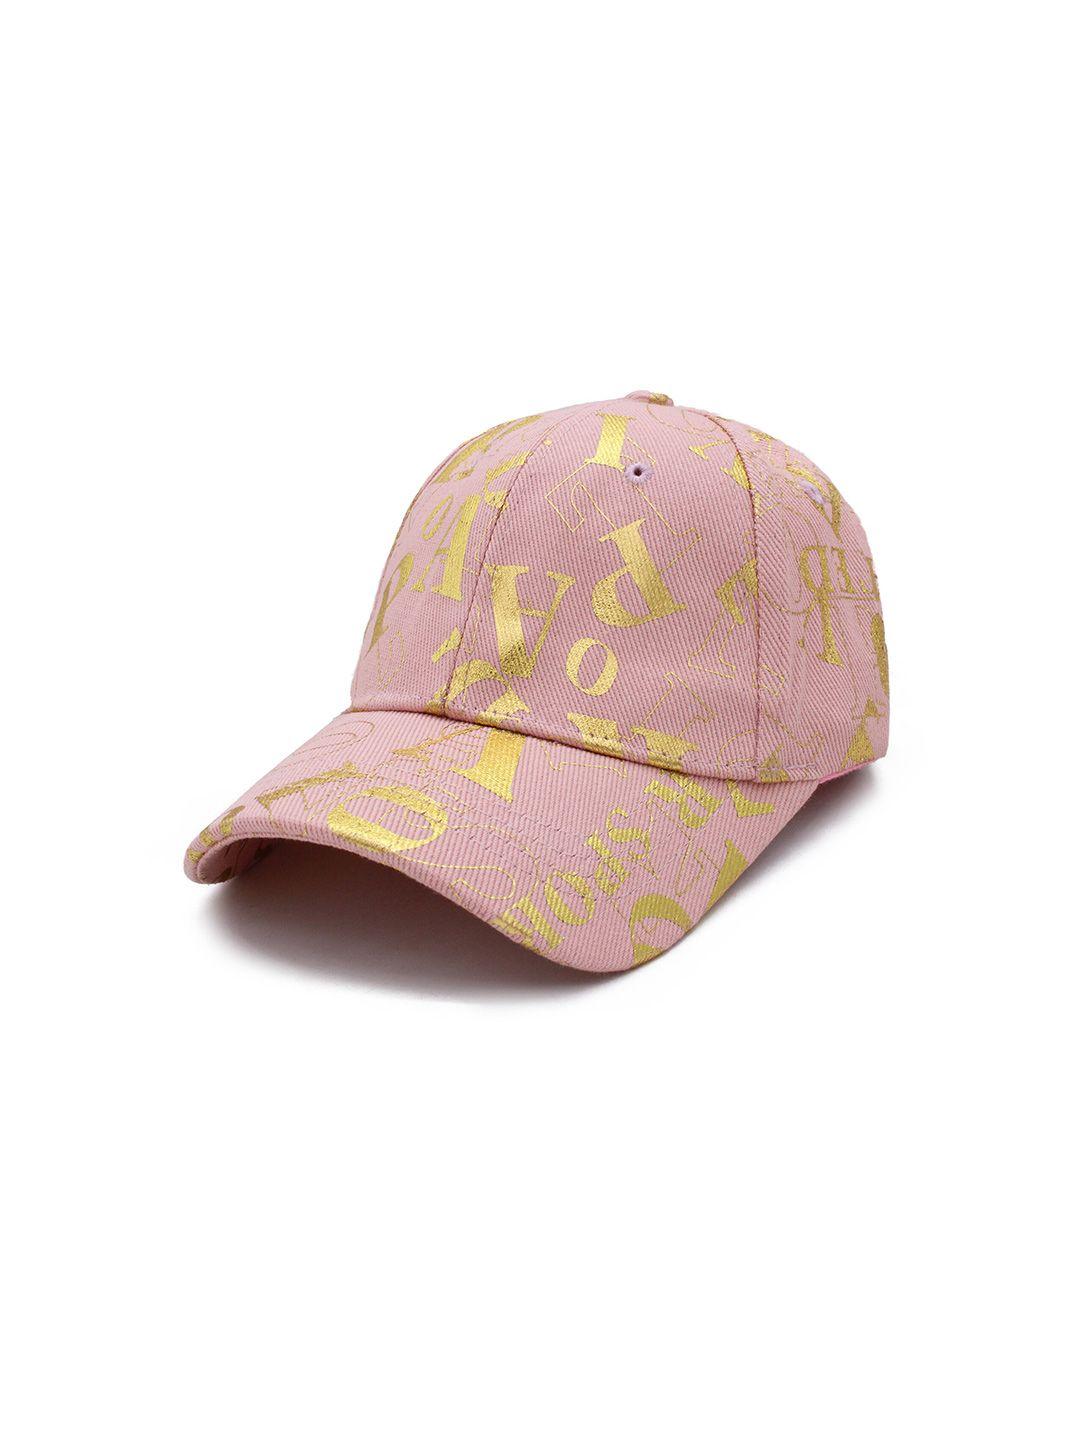 jenna boys pink & gold-toned printed baseball cap